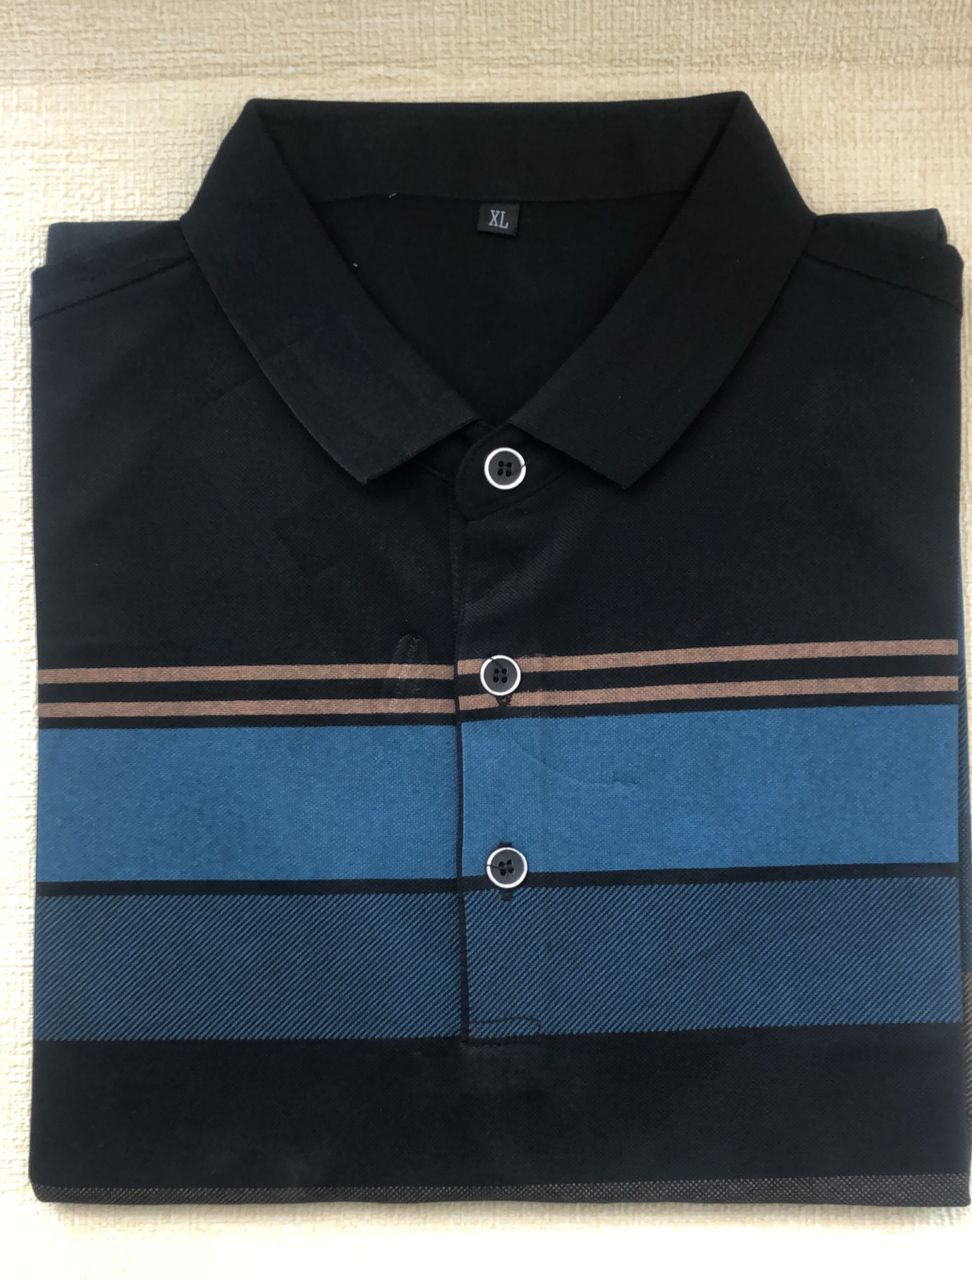  Men's Polo Shirts Casual Polo Shirts Cotton Striped Business Men's T-shirts High-Quality Short Sleeve Black